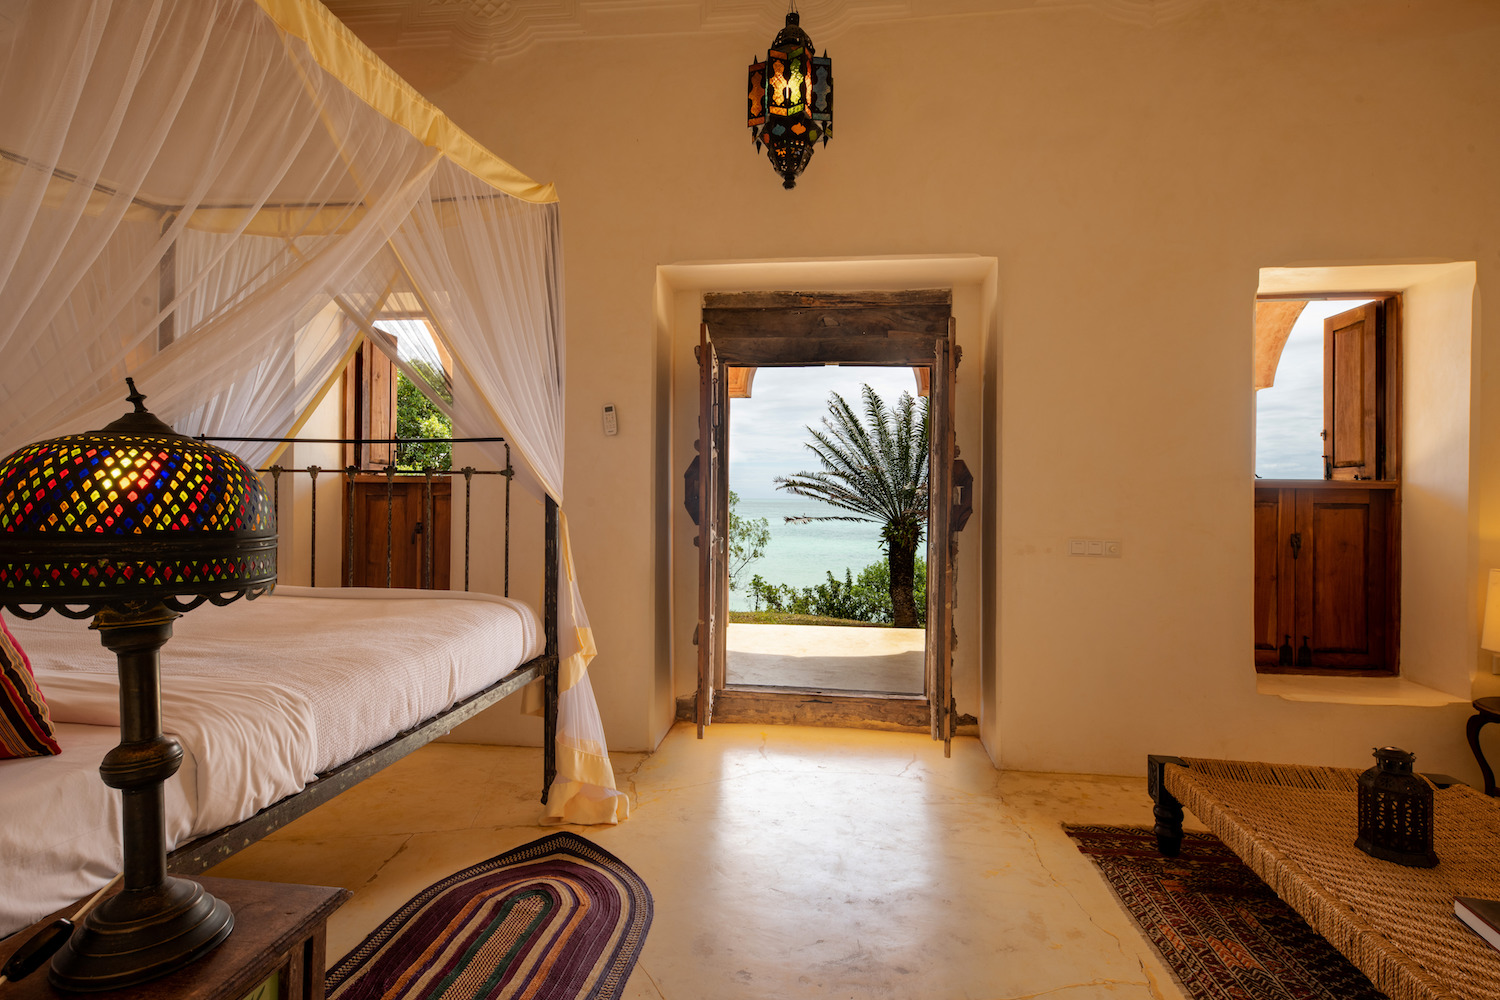 Qambani Luxury Resort Zanzibar Hotel - Sundowner Villa bedroom with view out of door onto the veranda and out to the Indian Ocean